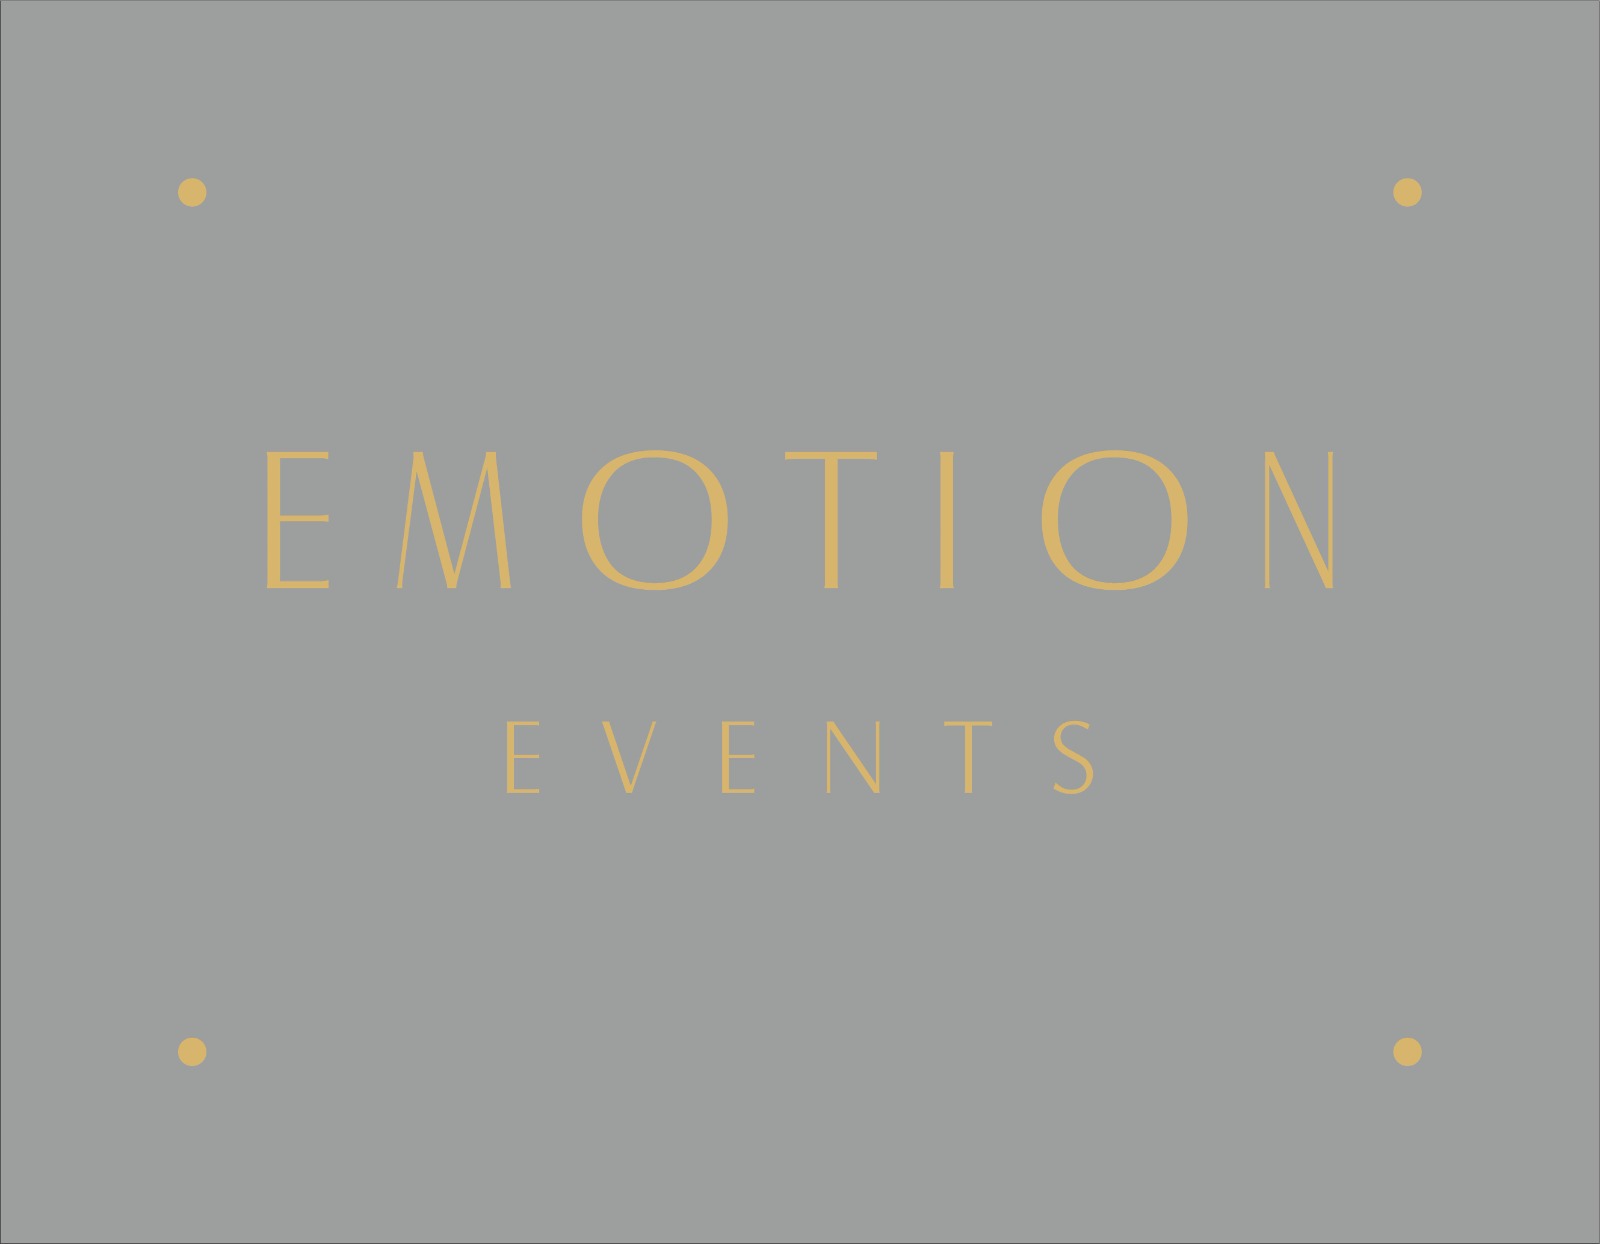 Emotion Events